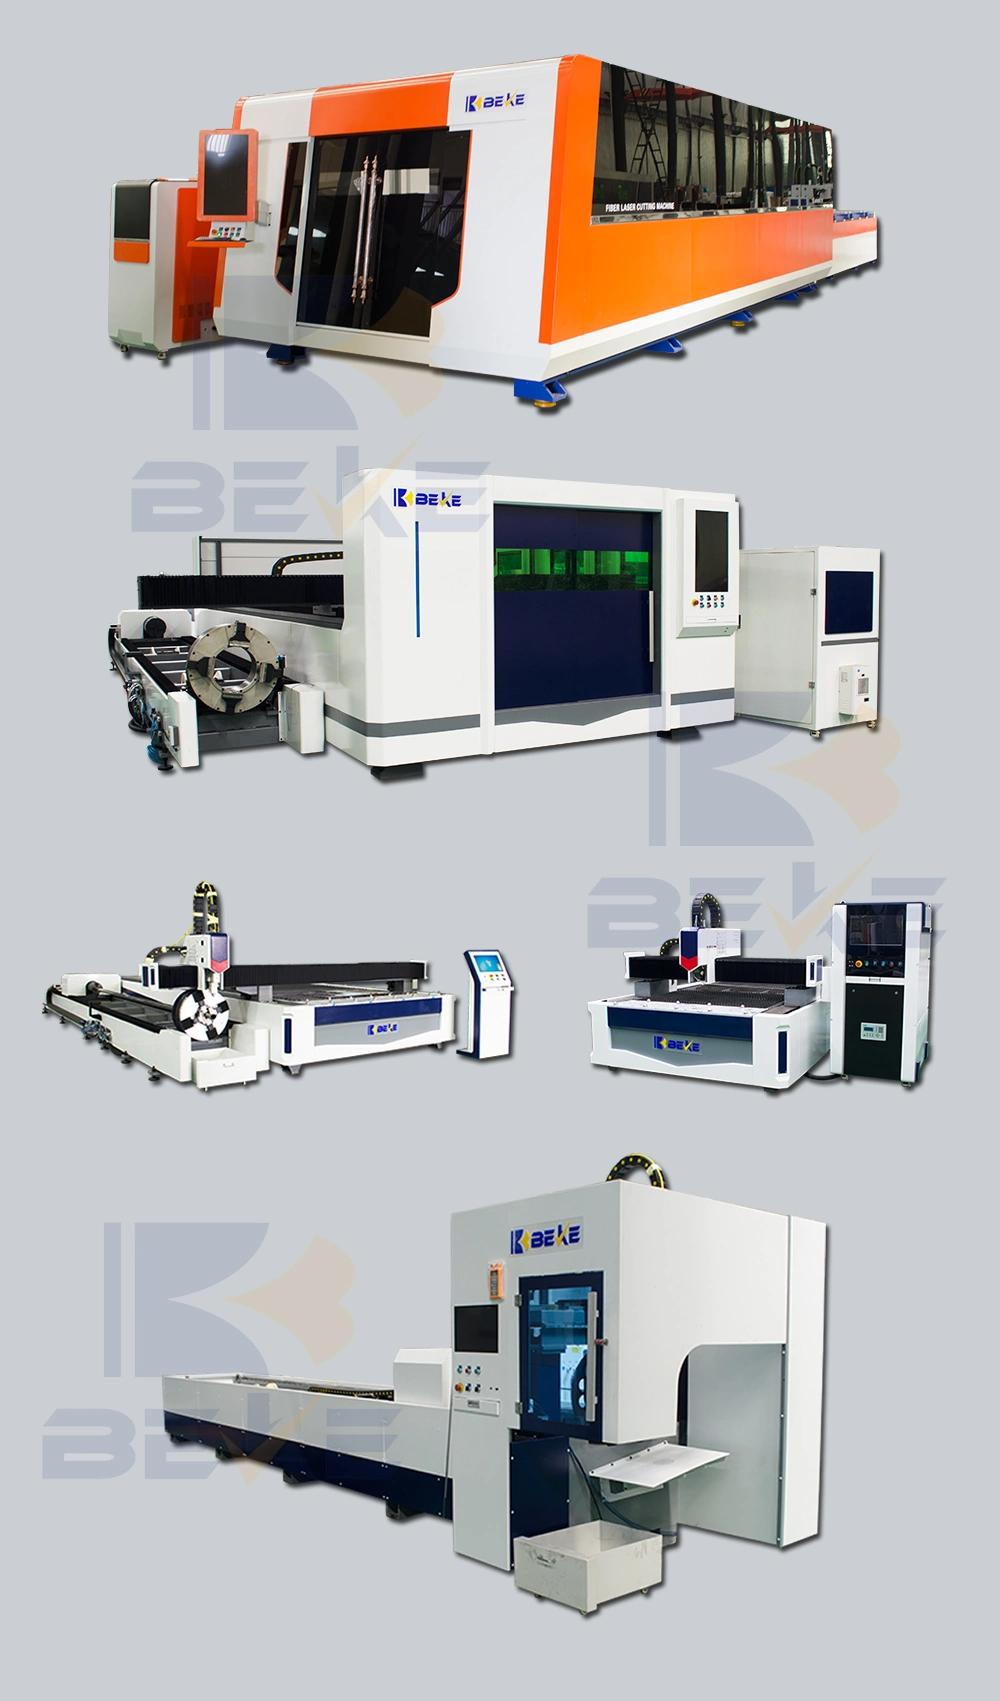 Beke Brand Hot Sales 3000W Circle Tube CNC Laser Cutting Machine